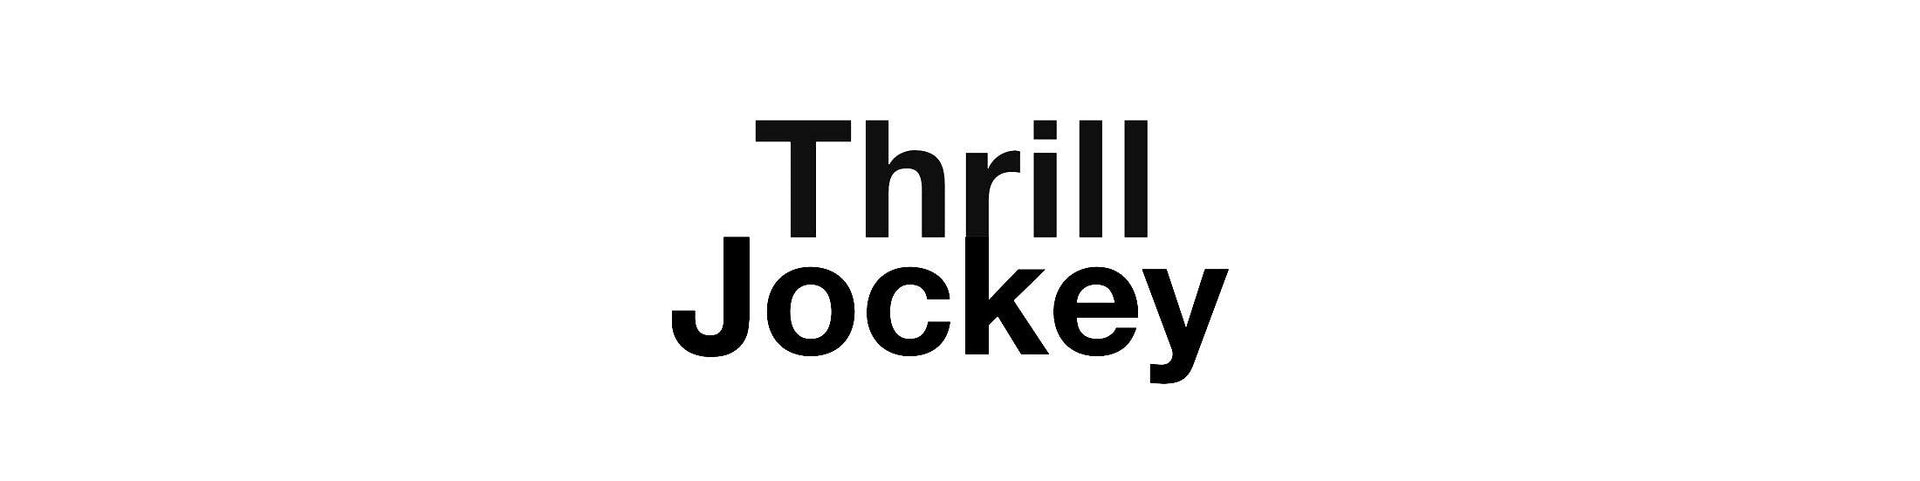 Shop – Thrill Jockey – Band & Music Merch – Cold Cuts Merch